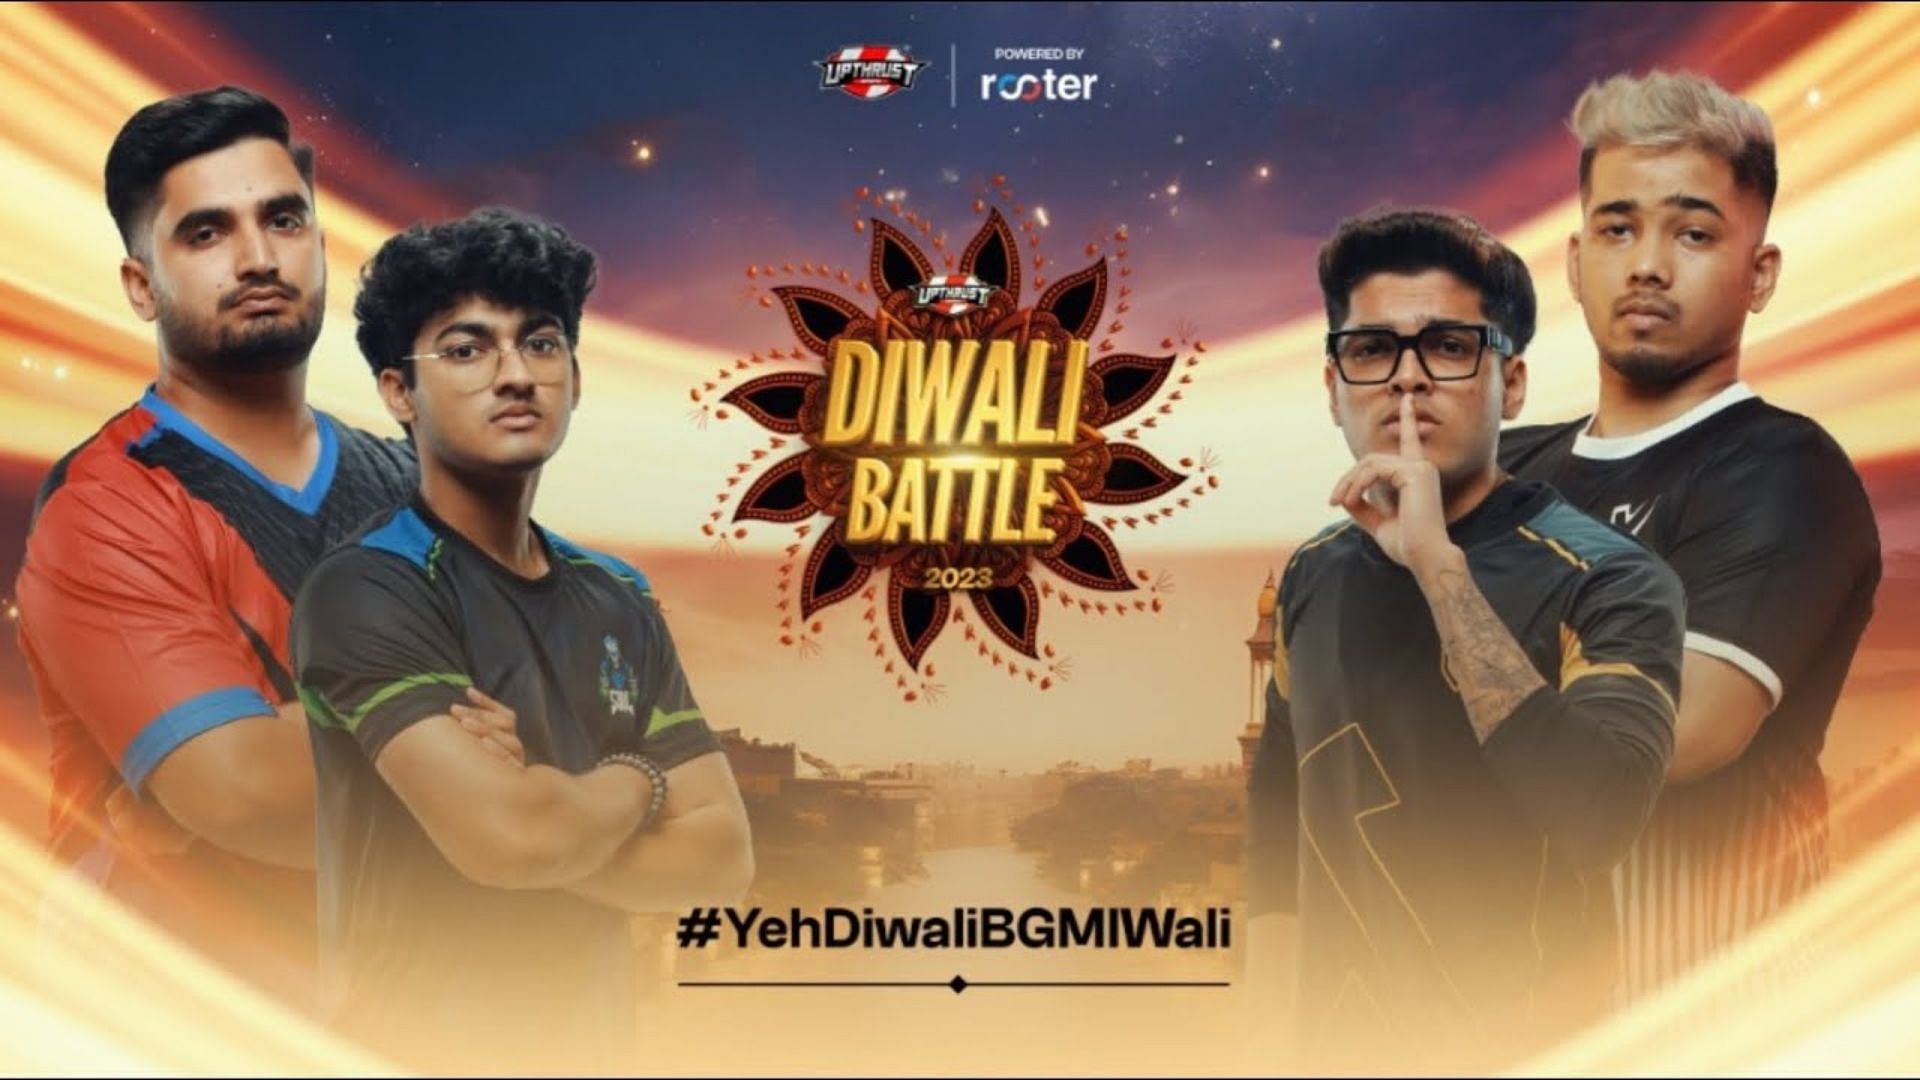 BGMI Diwali Battle Finale starts on November 7 (Image via Upthrust Esports)